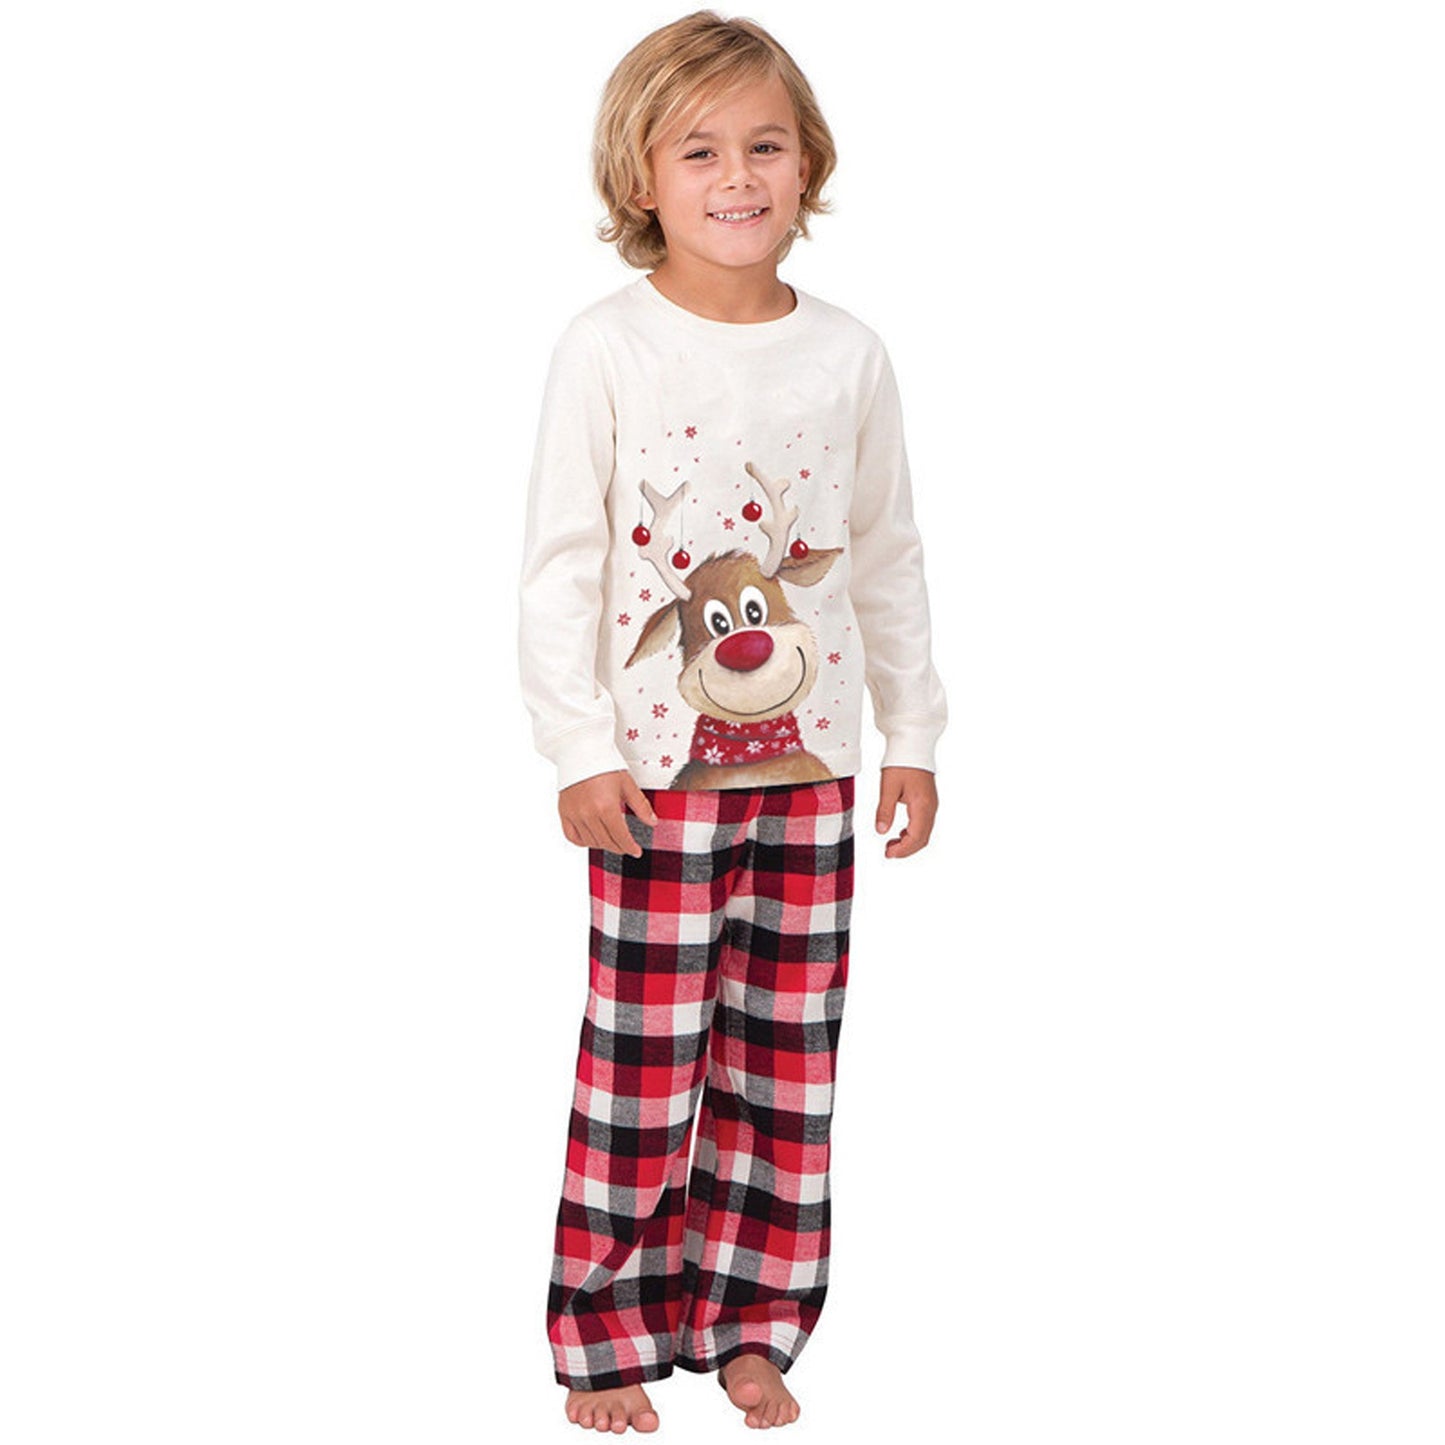 Cute Reindeers Matching Family Pajamas